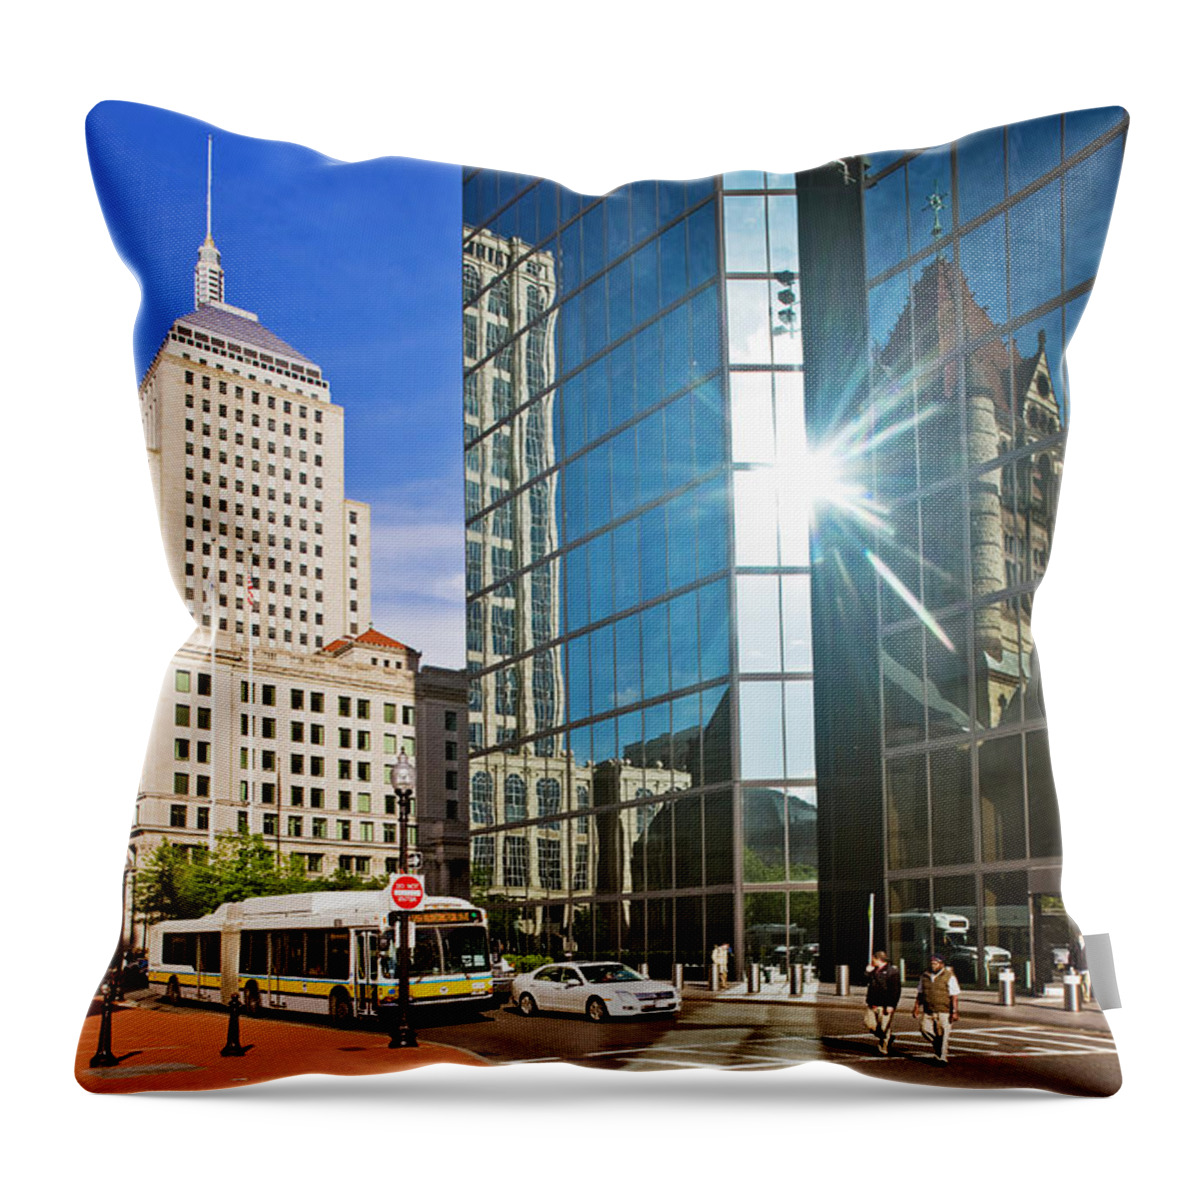 Estock Throw Pillow featuring the digital art Copley Square, Boston by Massimo Borchi